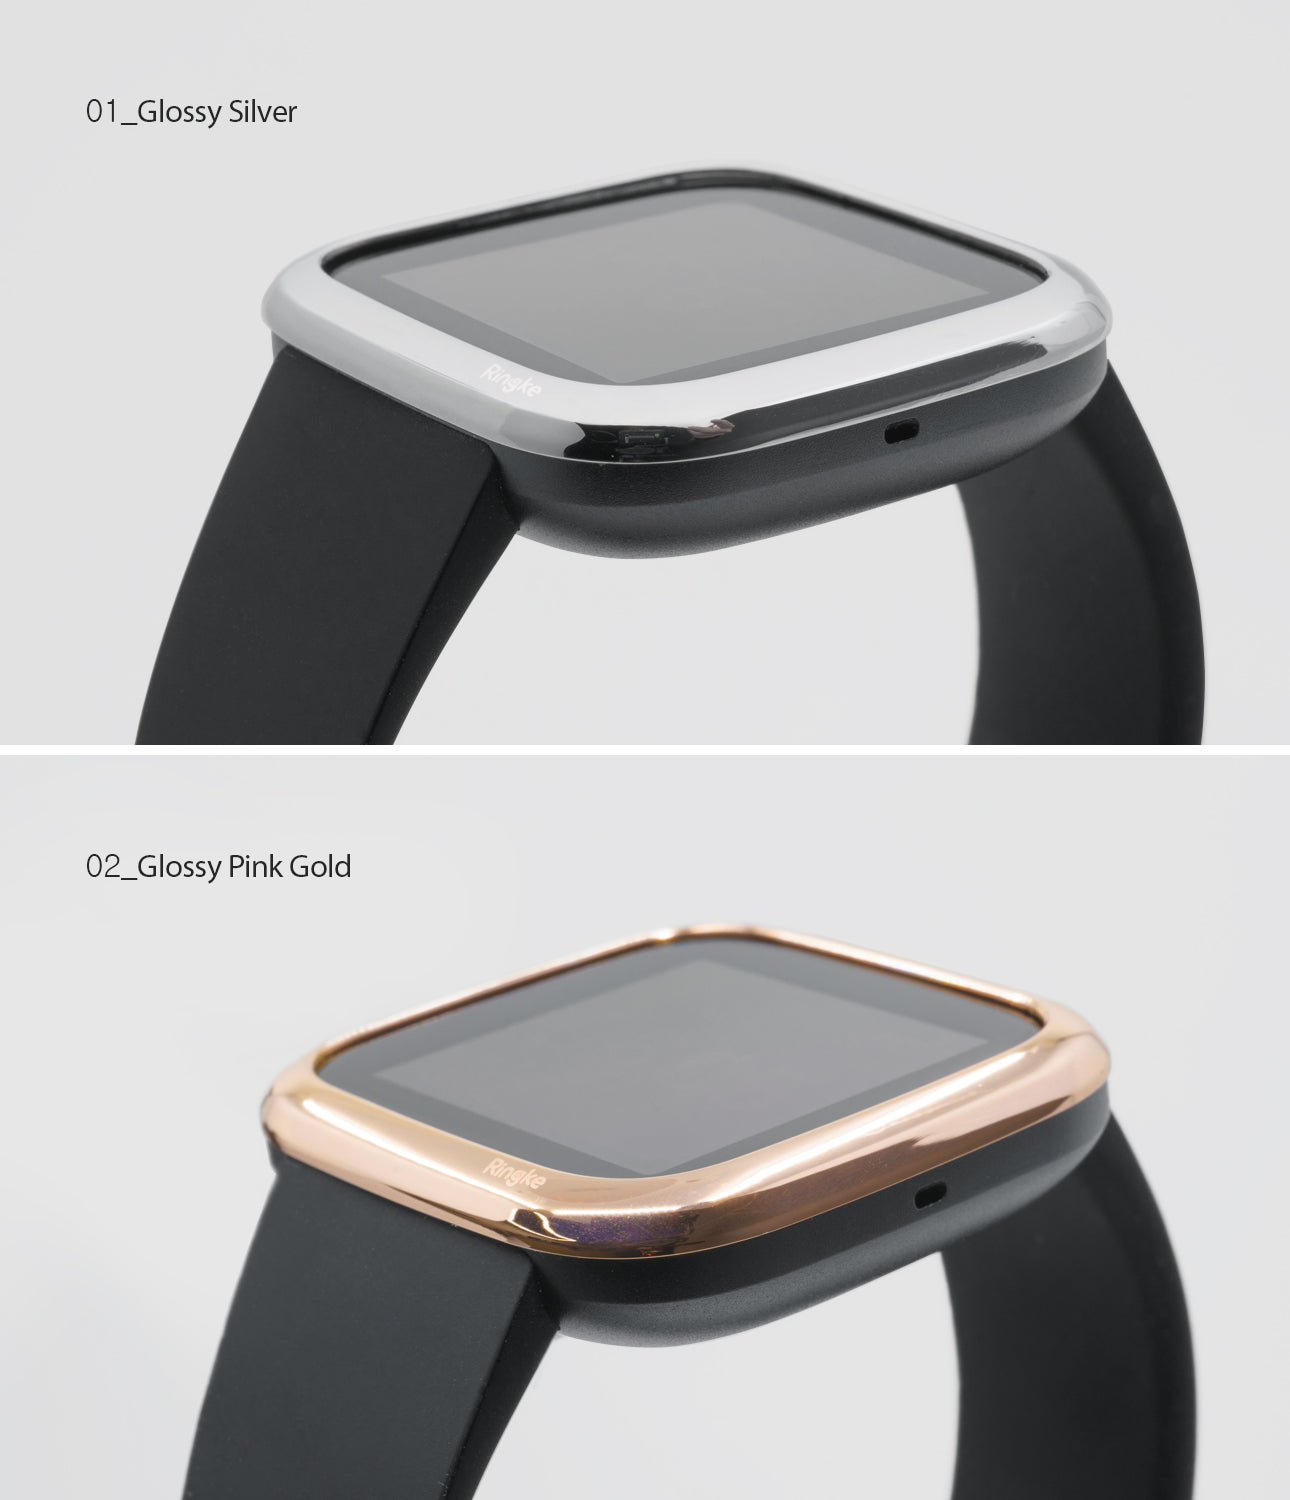 Ringke Bezel Styling Fitbit Versa 2, Full Stainless Steel Frame, Glossy Silver, Stainless Steel, 2-01 ST